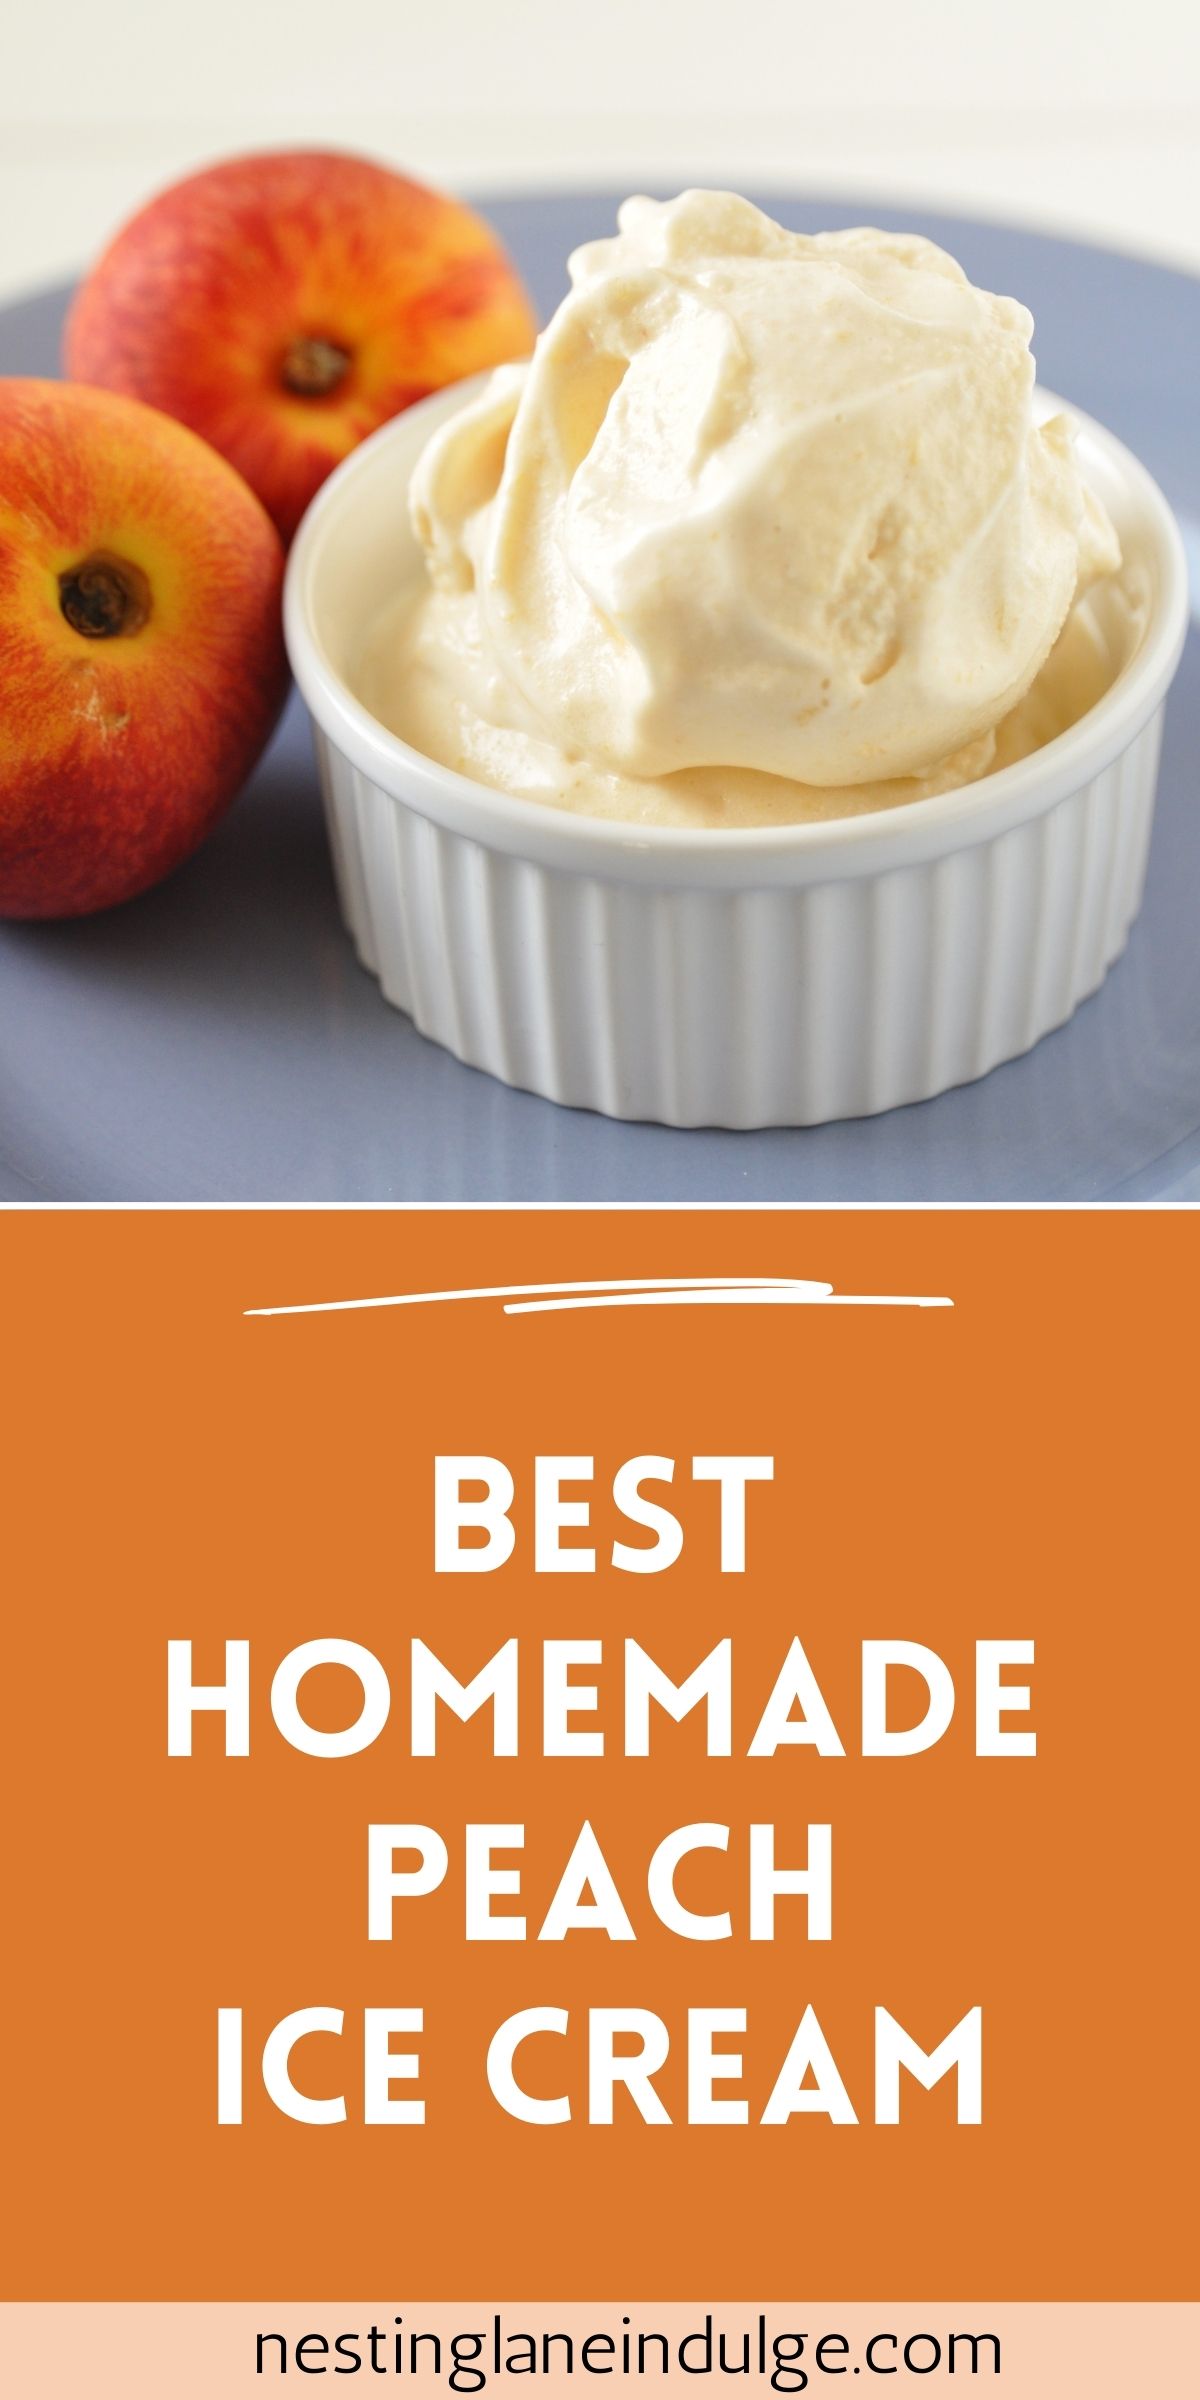 Graphic for Pinterest of Homemade Peach Ice Cream Recipe.